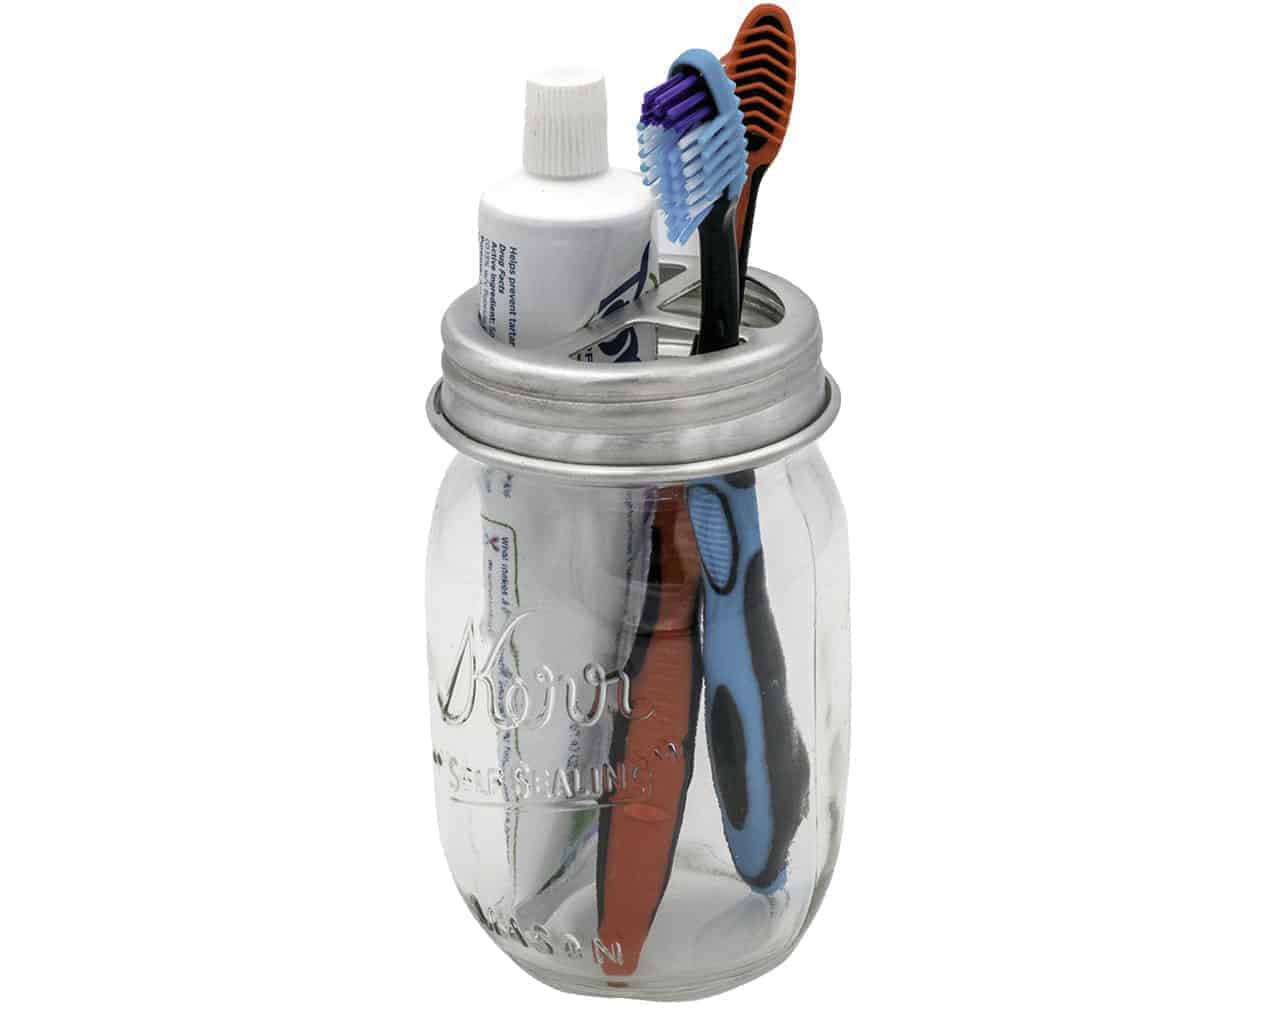 Toothbrush Holder for Mason Jar (Regular Mouth)